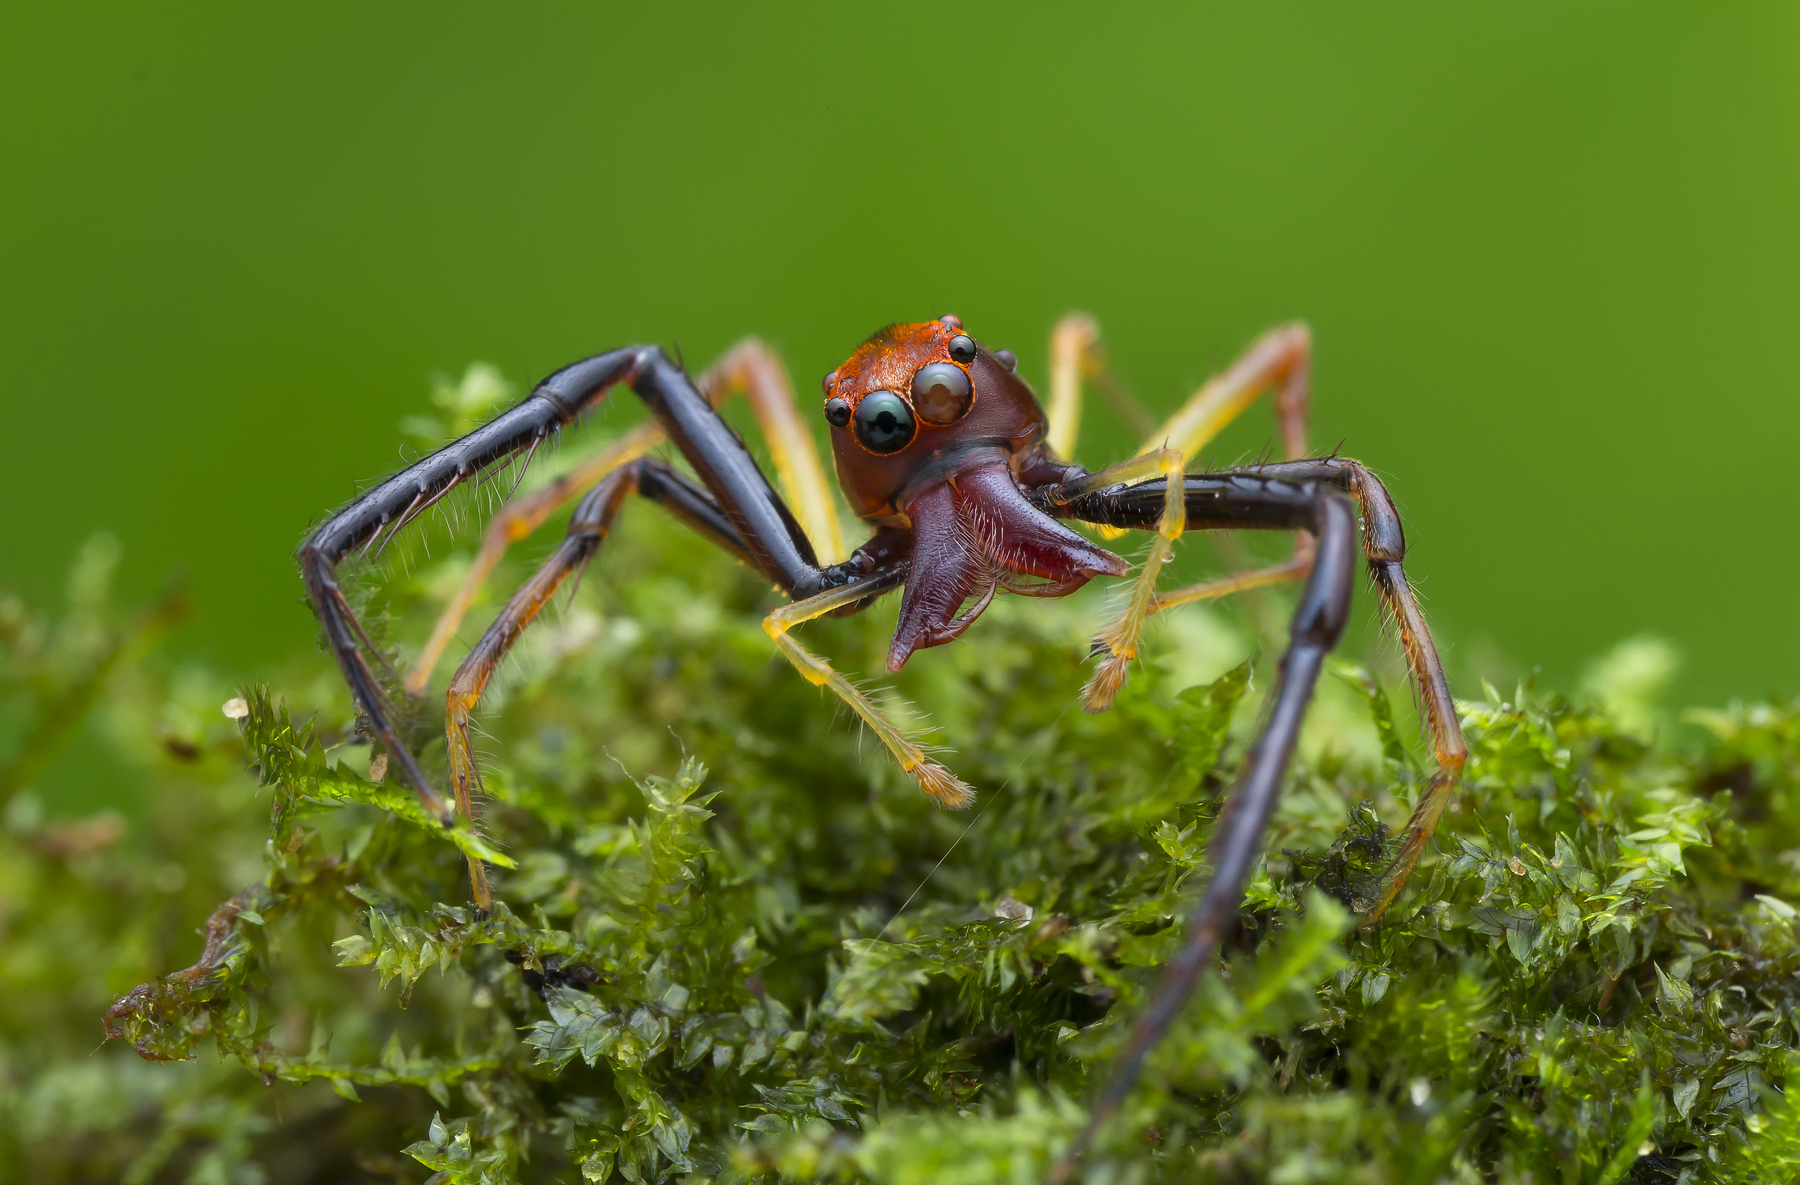 General 1800x1185 macro nature animals spider arachnid insect closeup minimalism depth of field